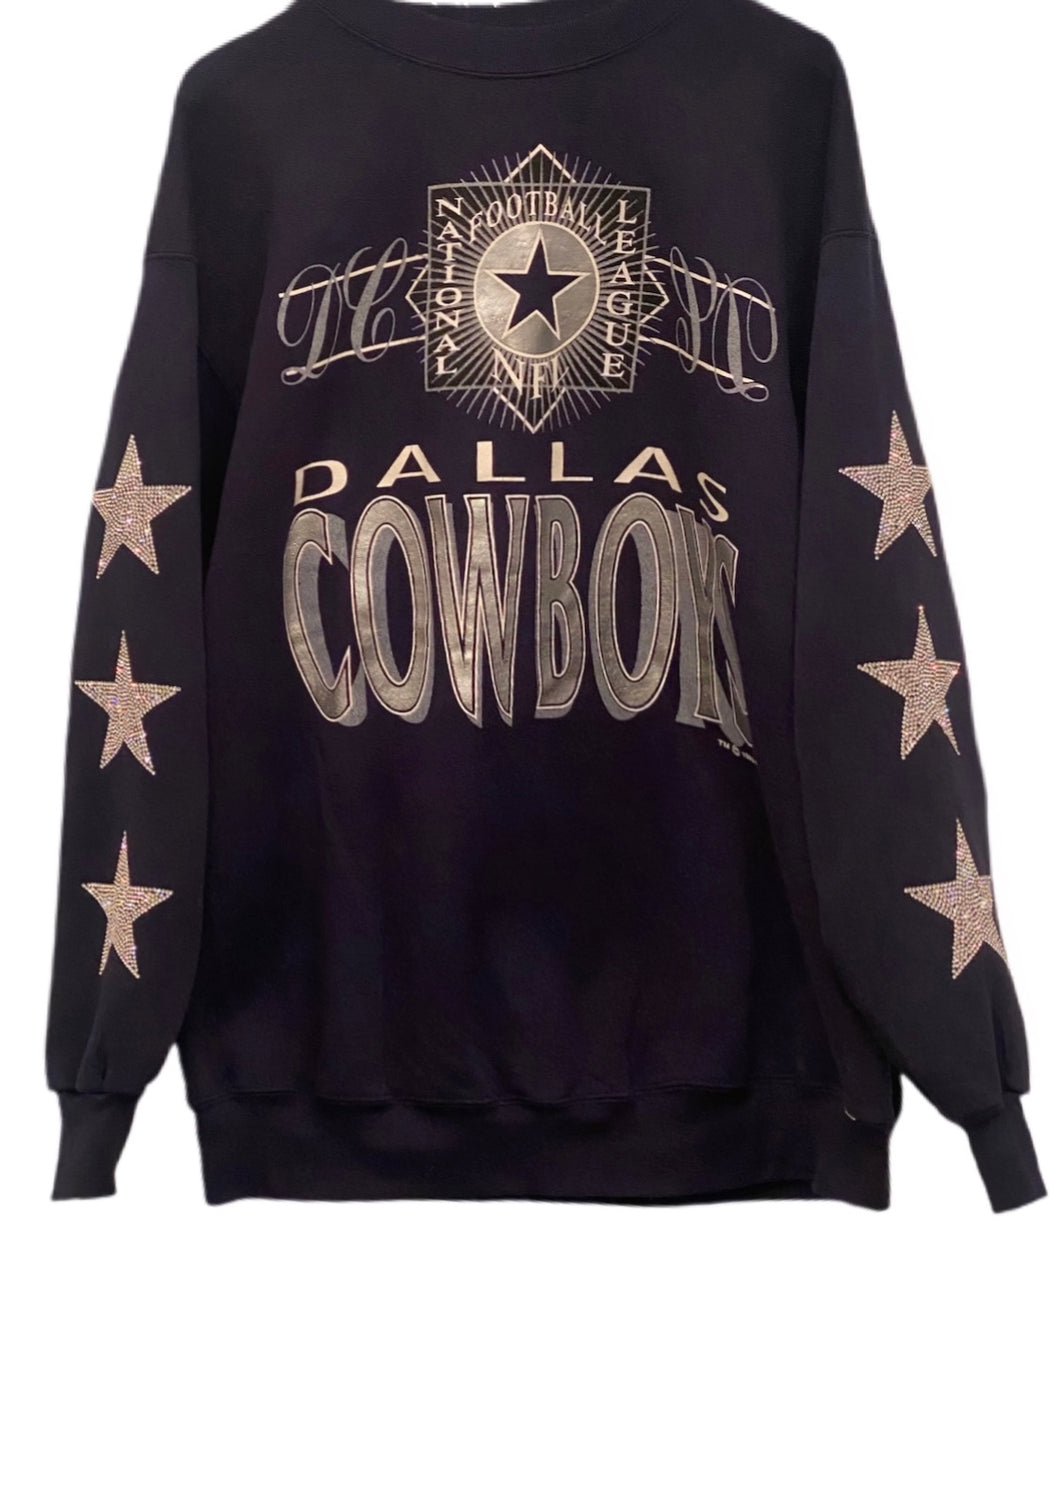 Dallas Cowboys, NFL One of a KIND Vintage Sweatshirt with Three Crystal Star Design